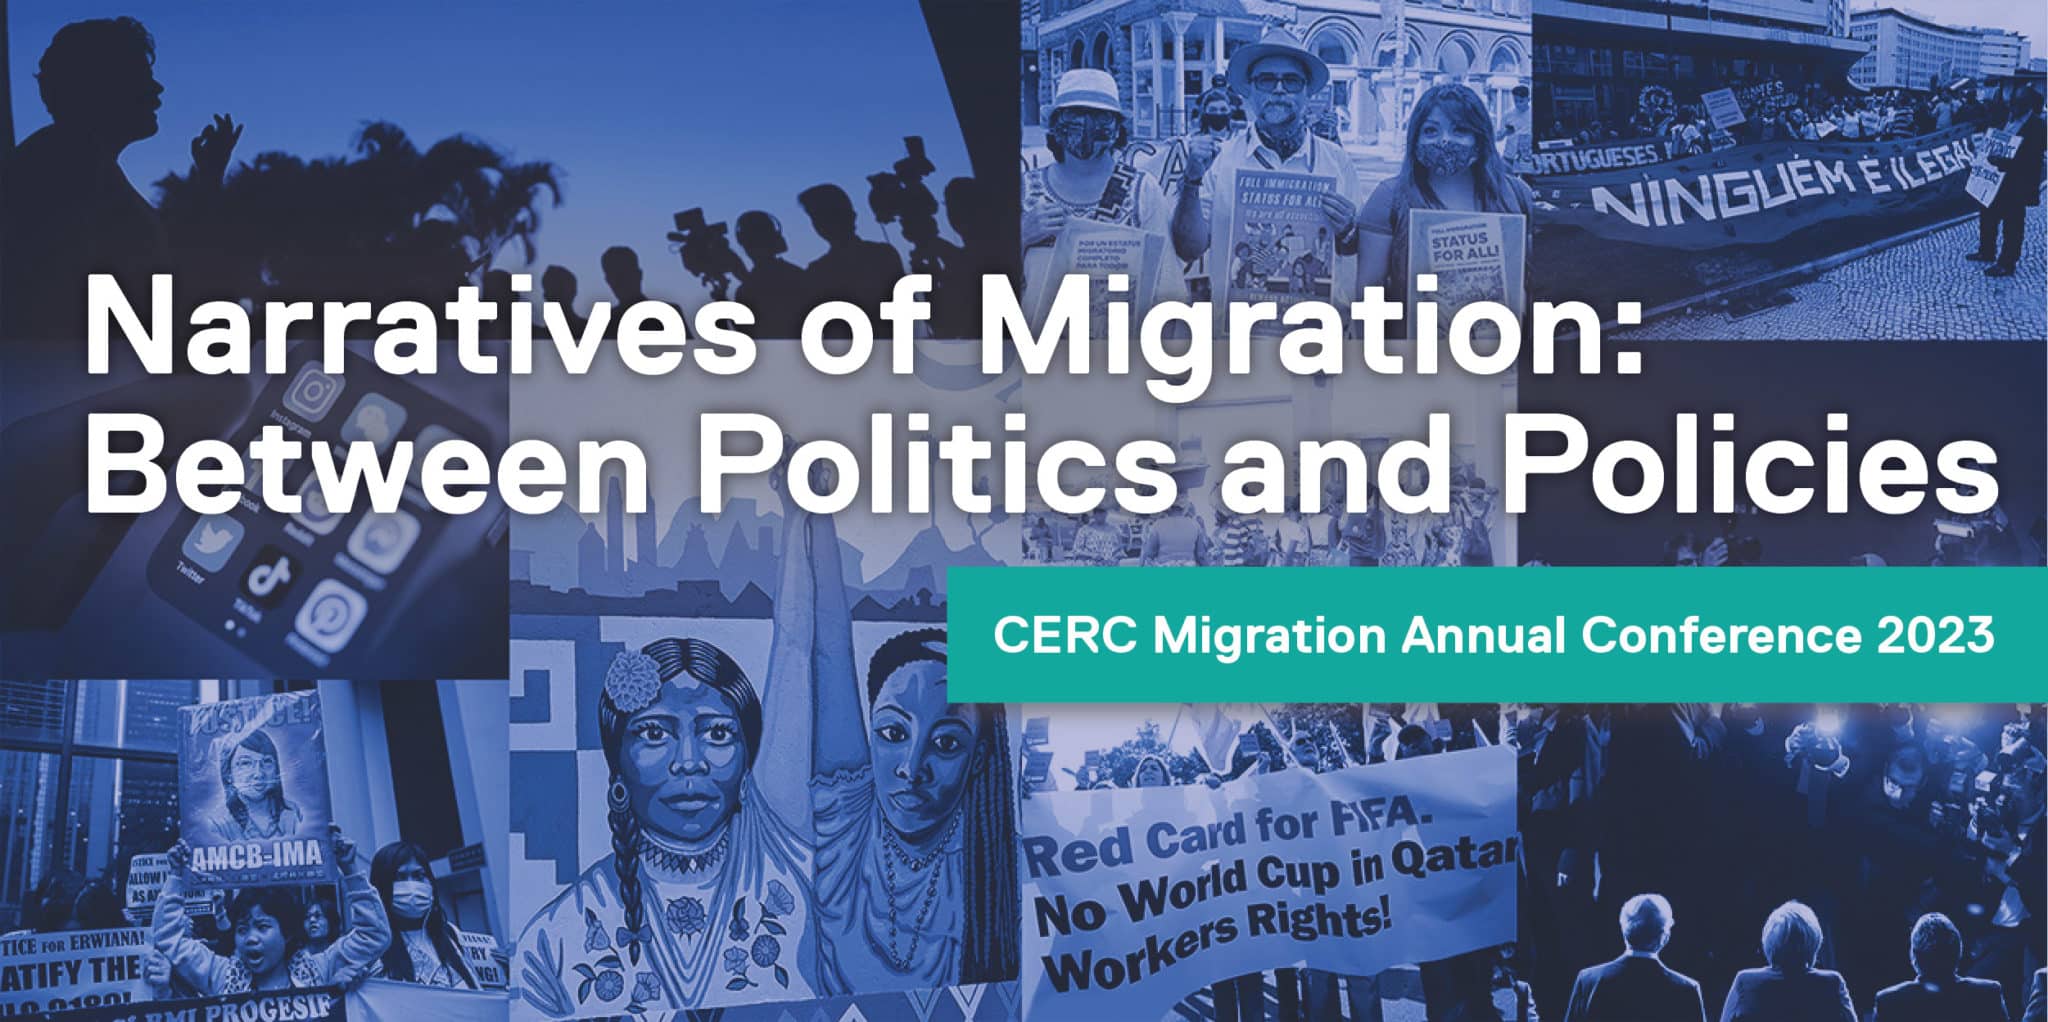 Poster for the CERC Migration conference "Narratives of Migration"